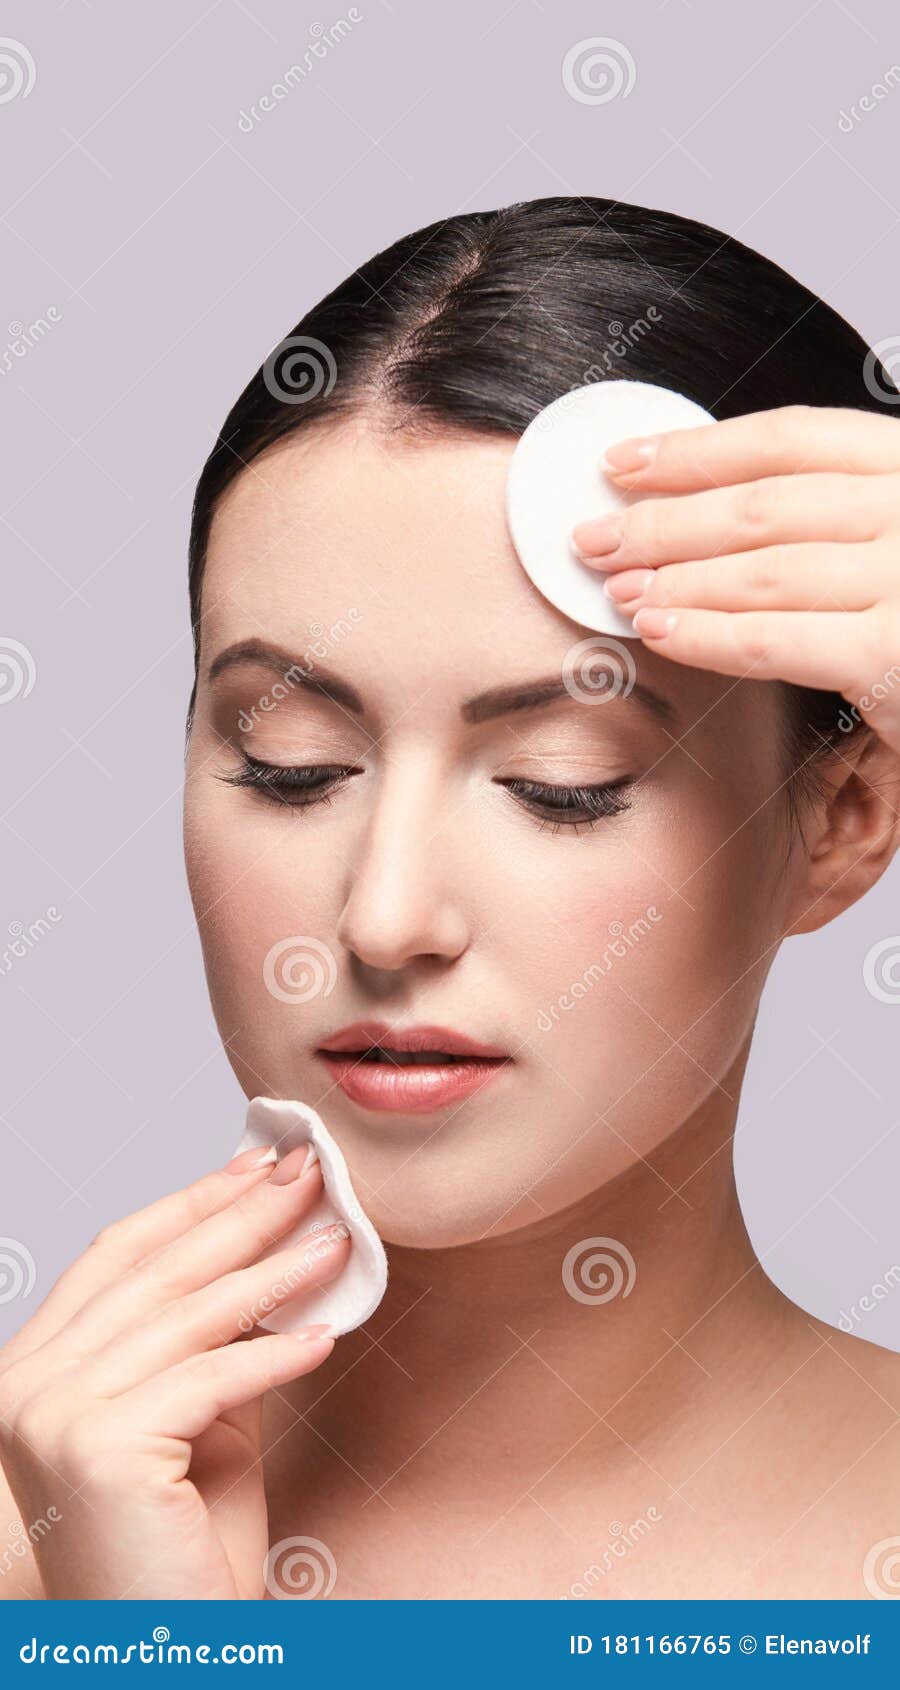 girl remove mascara. cotton pad. skin care evening routine